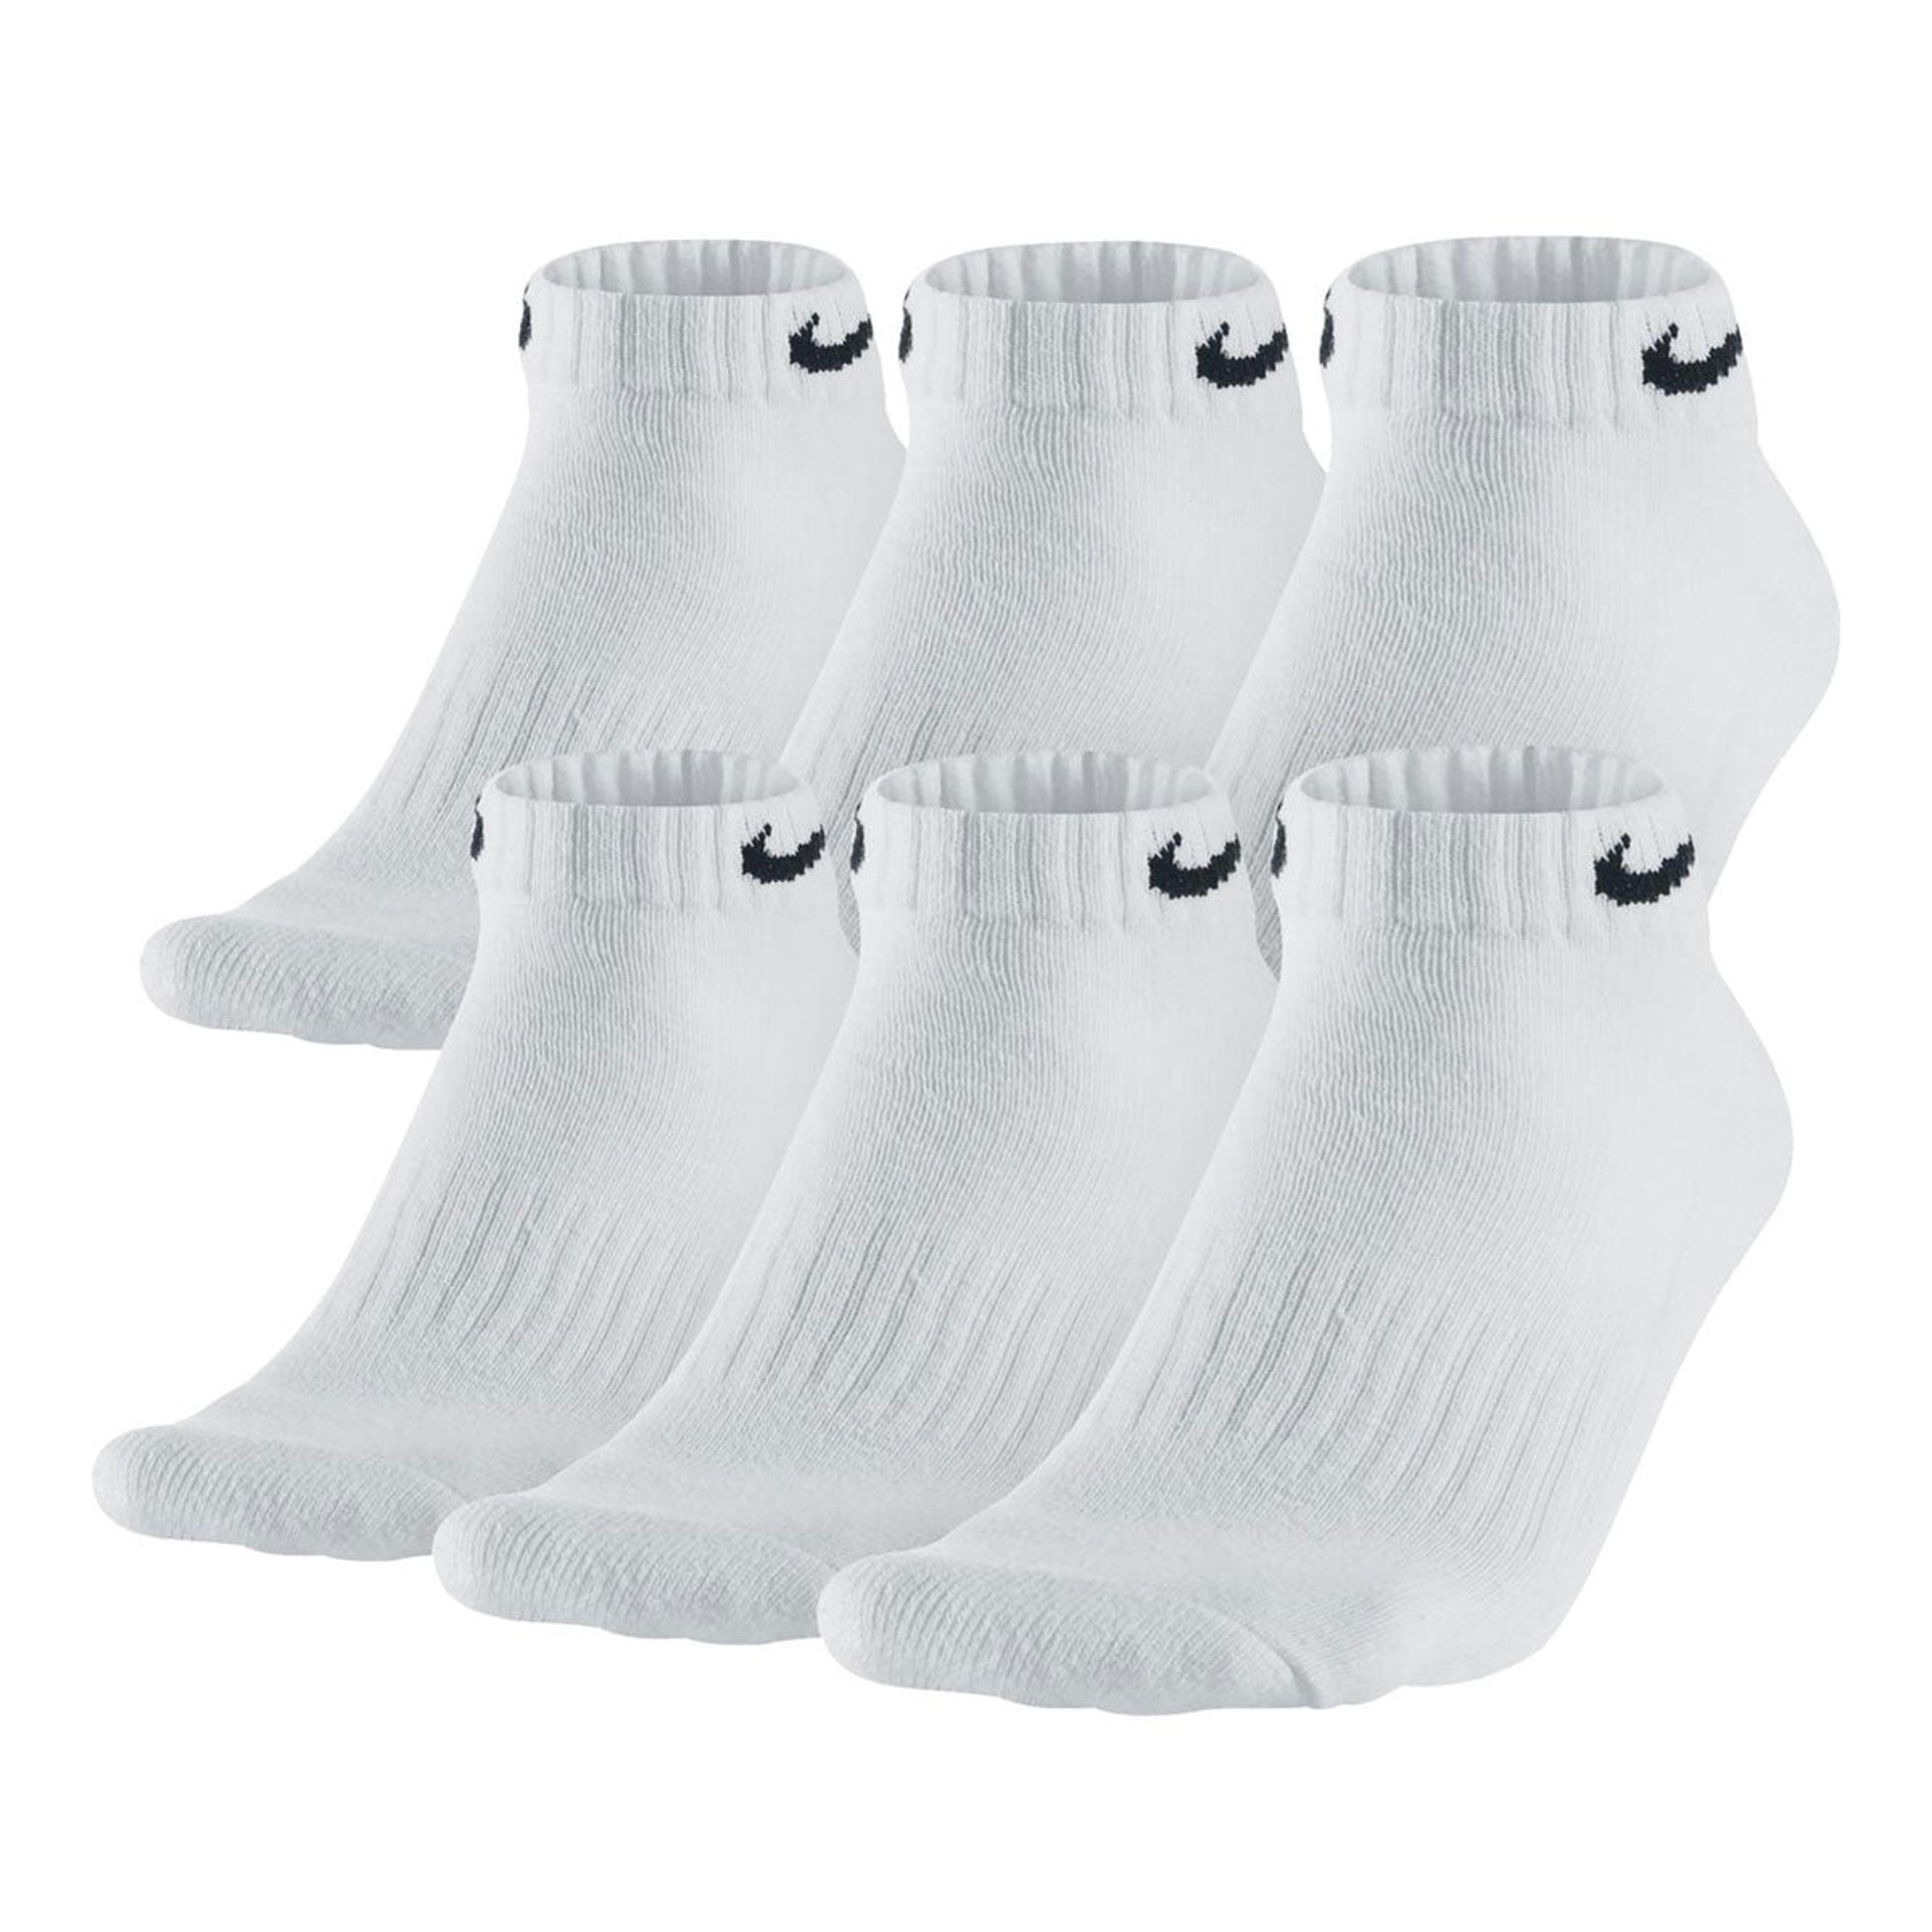 Nike Men's Everyday Plus Cushioned Low Cut Training Socks White 